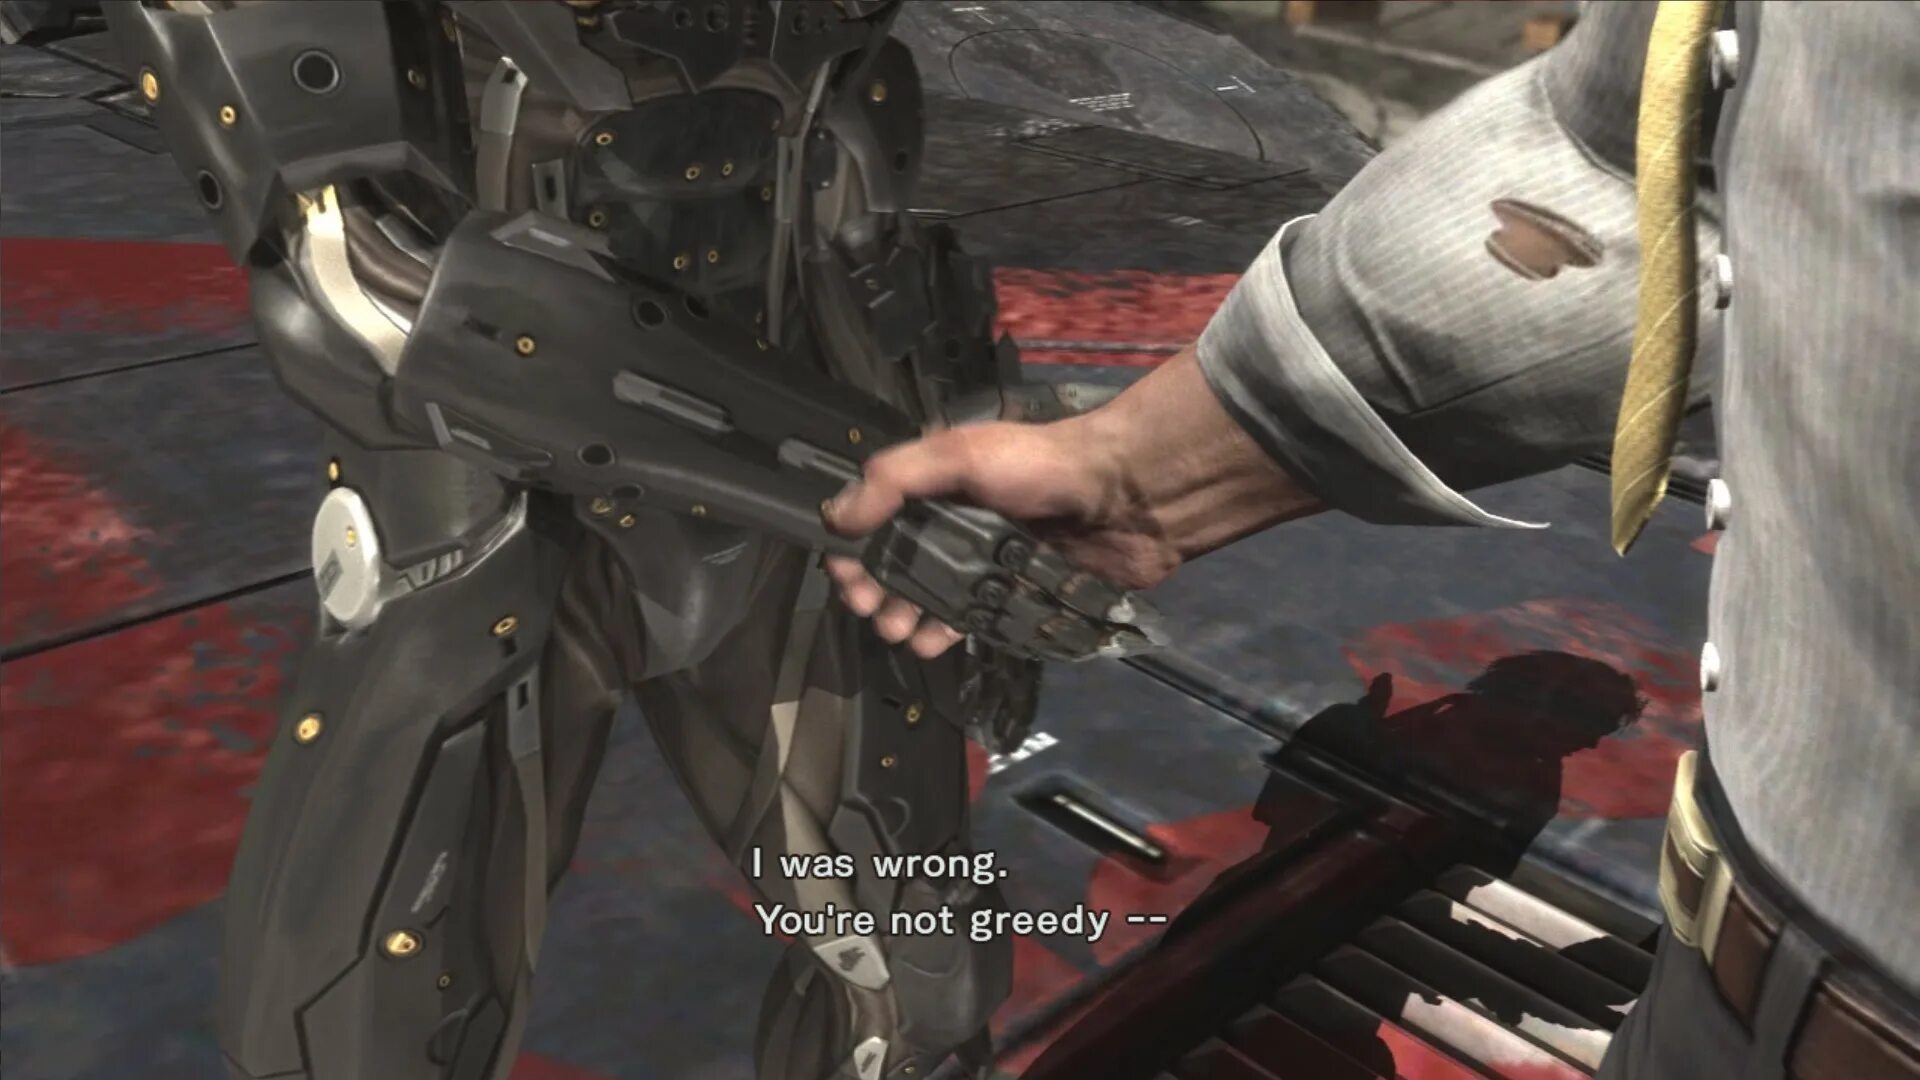 Сенатор Армстронг Metal Gear. Metal Gear Rising сенатор. Raiden and Armstrong handshake. Armstrong Metal Gear. Last wrong